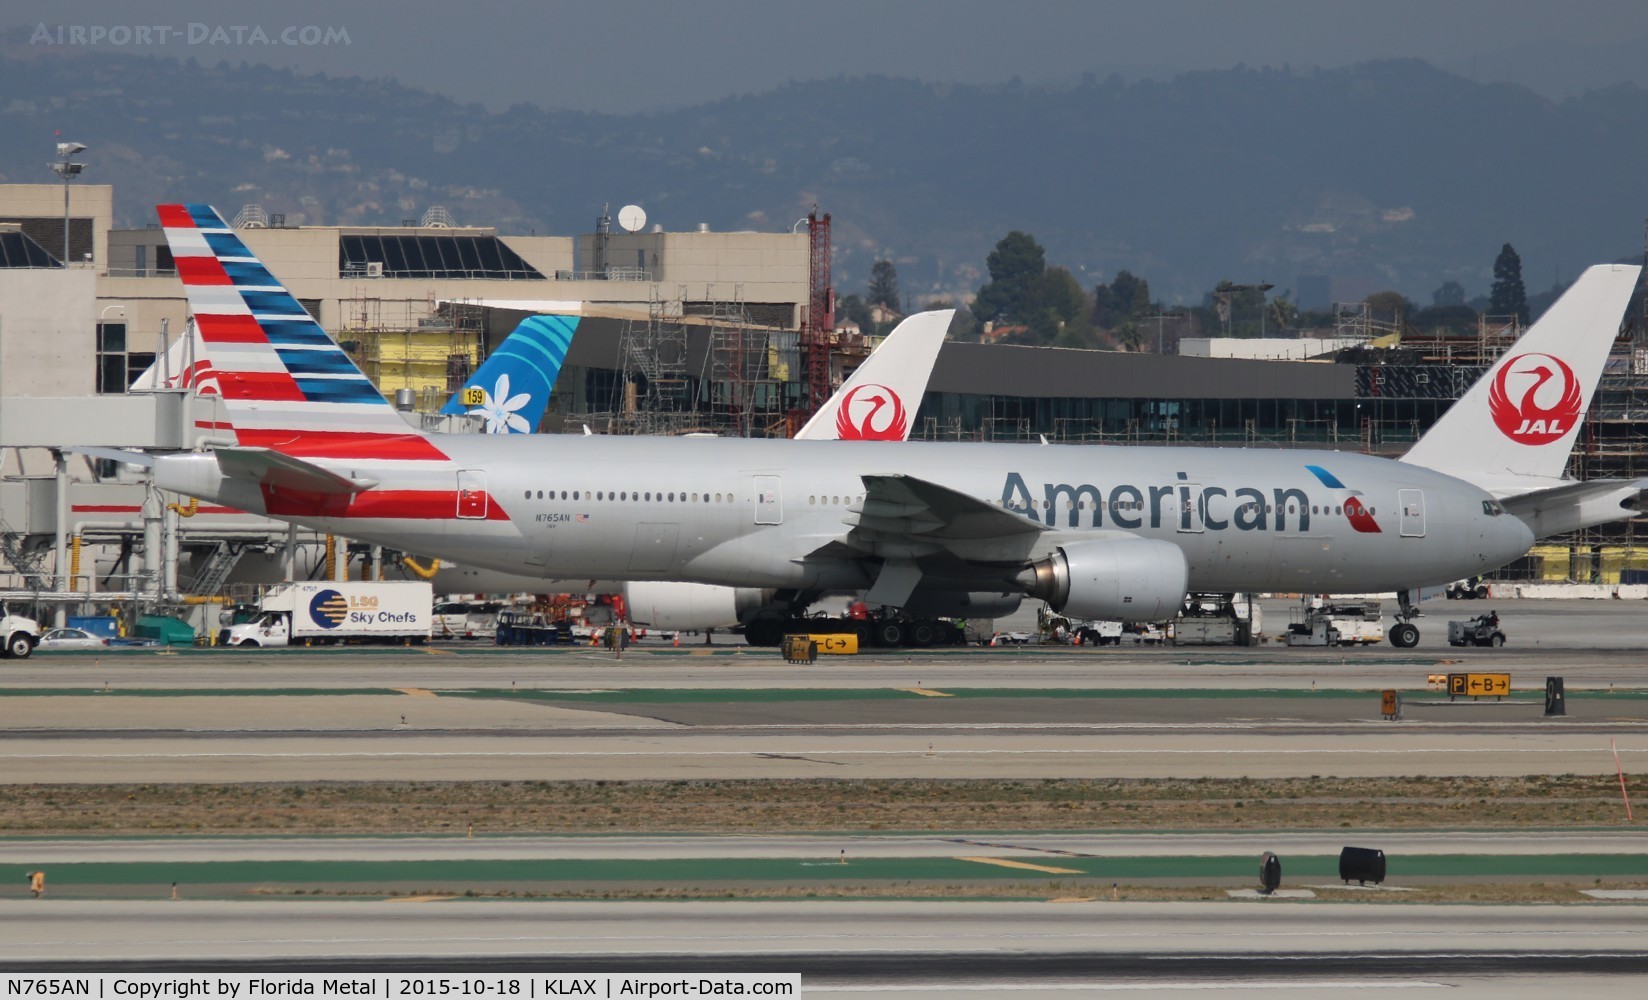 N765AN, 2003 Boeing 777-223 C/N 32879, LAX spotting 2015